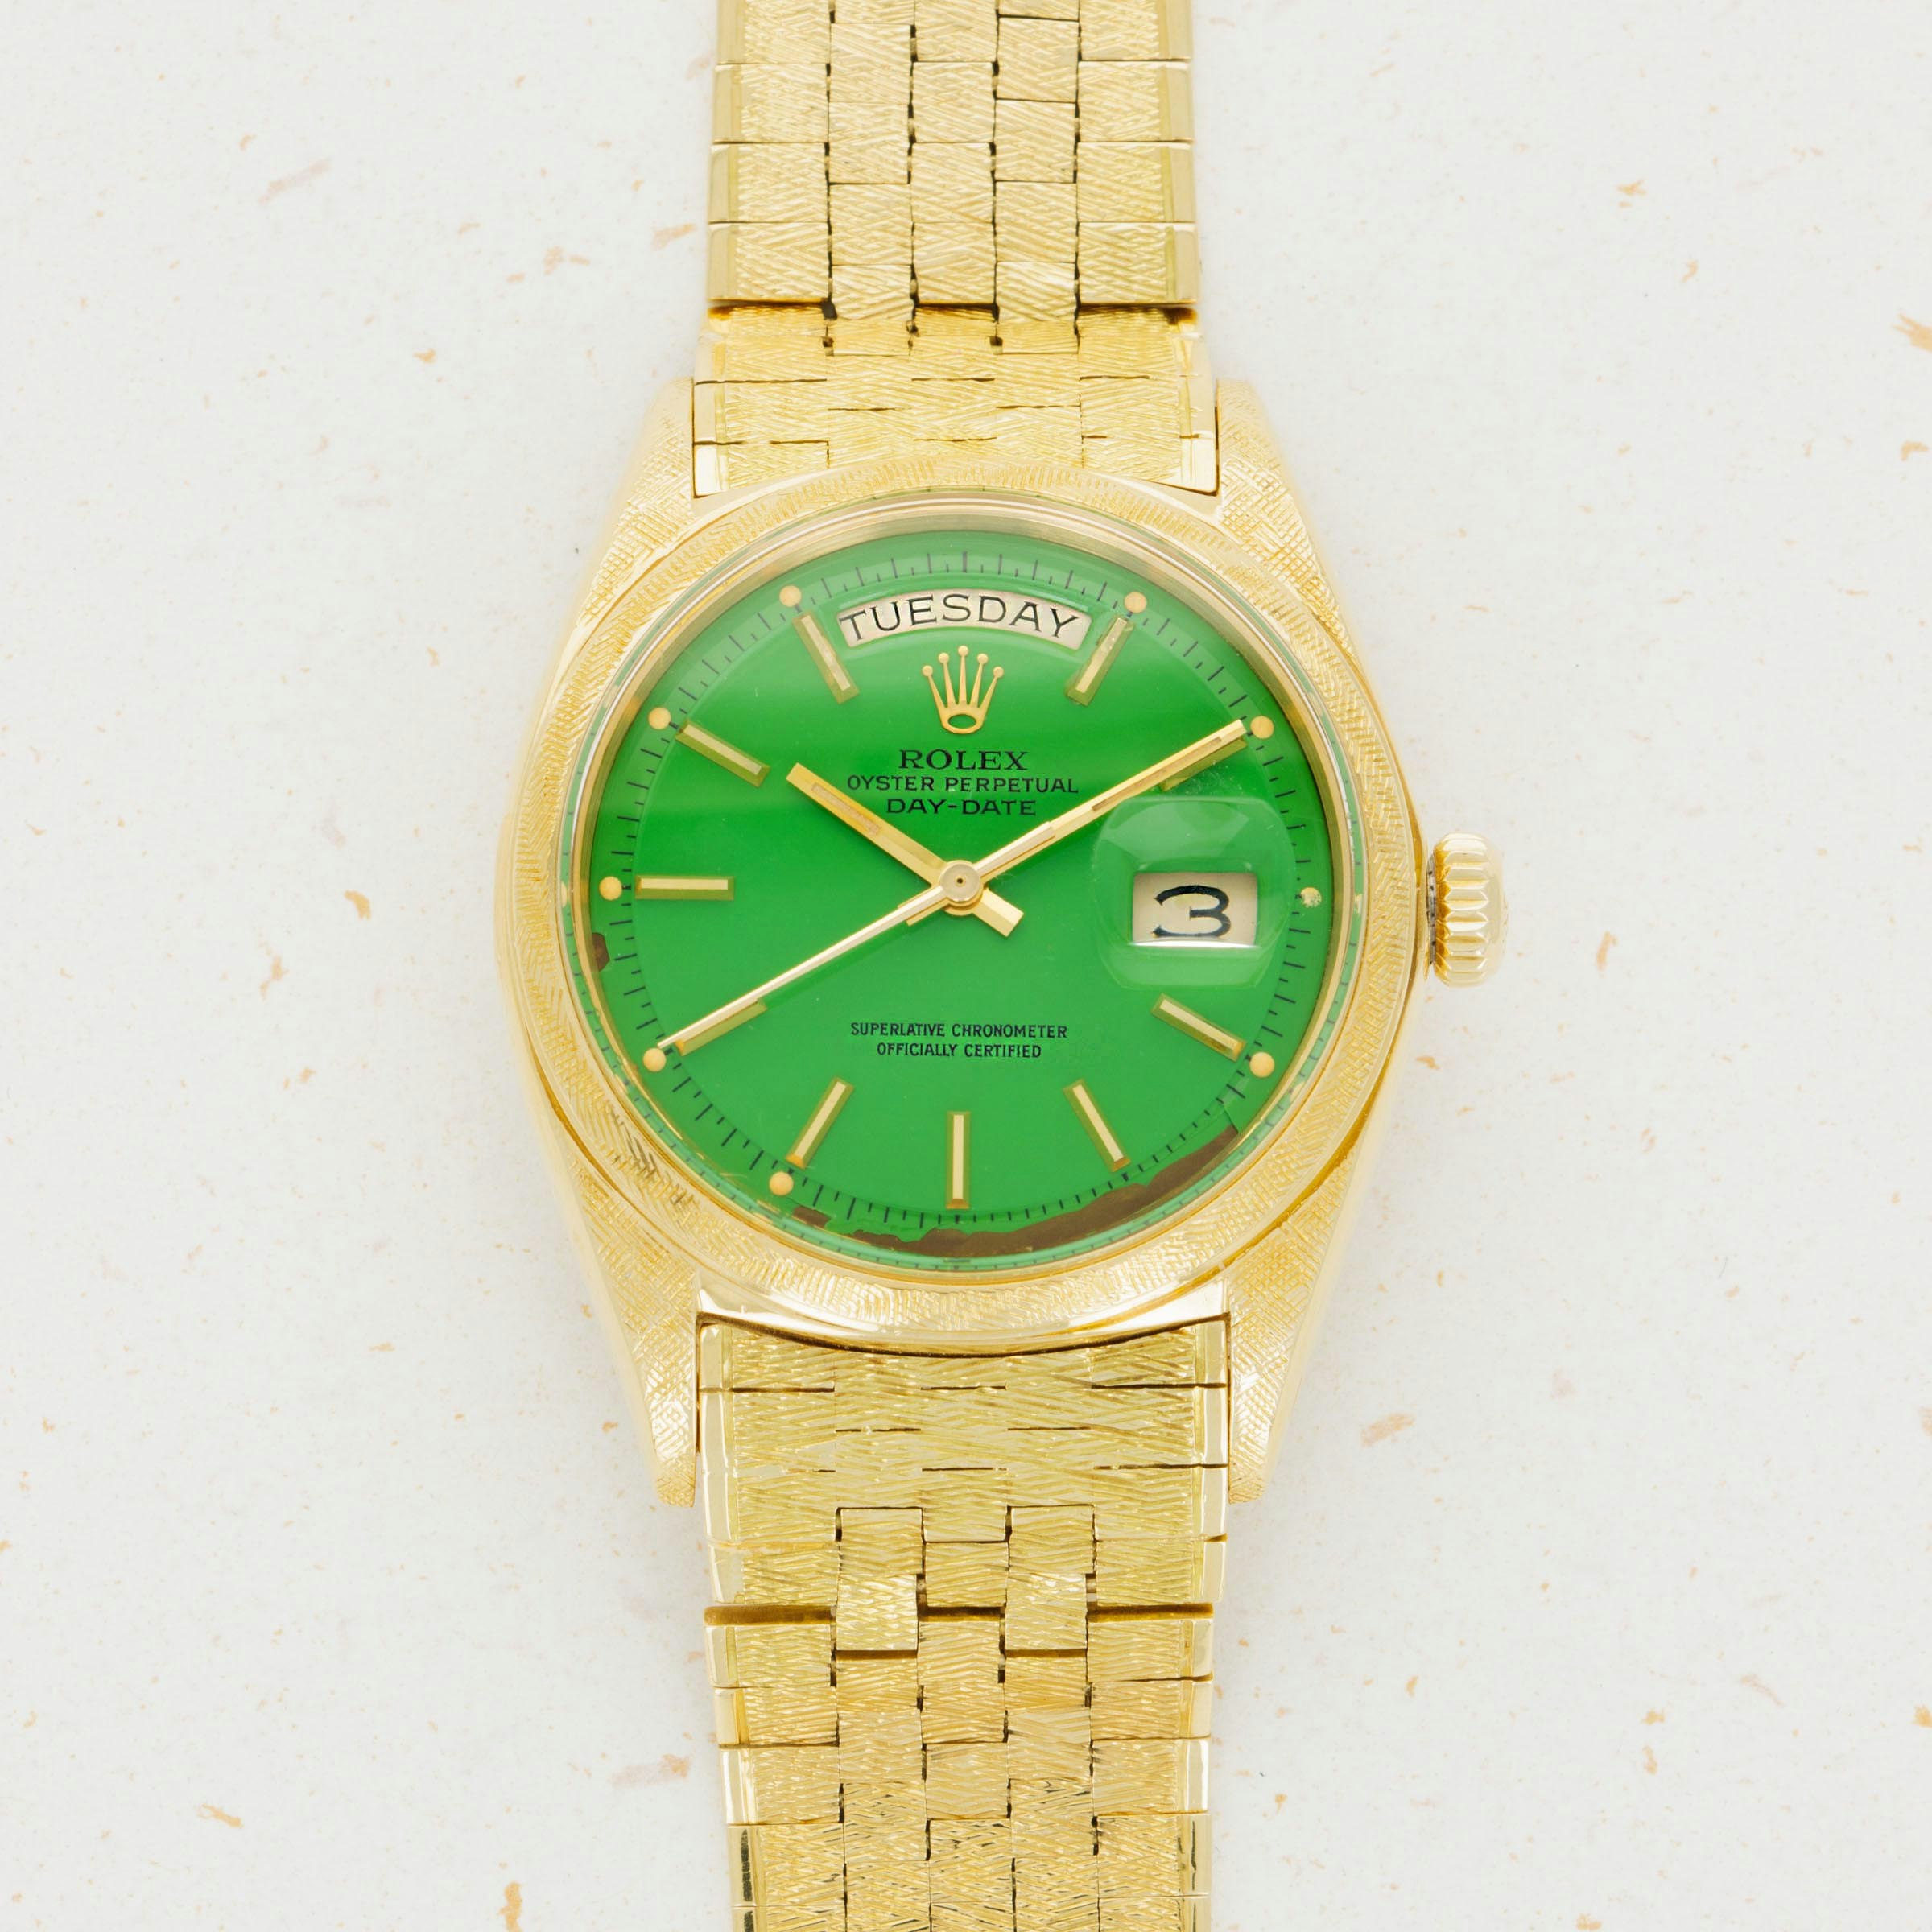 Thumbnail for Rolex Day-Date 1806 Green Stella Dial Florentine Finish Brick Bracelet